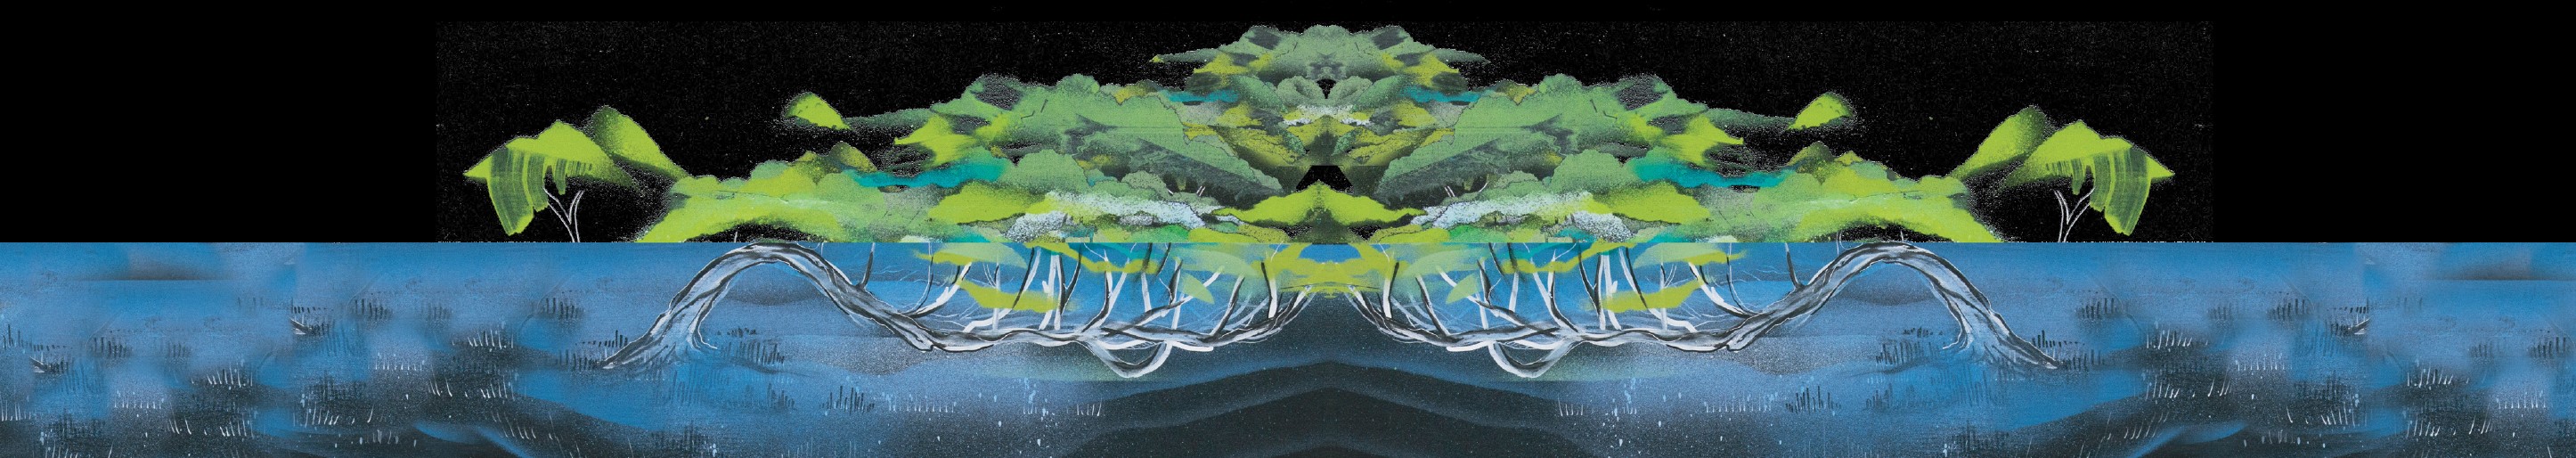 Painting of mangroves by David Cragg